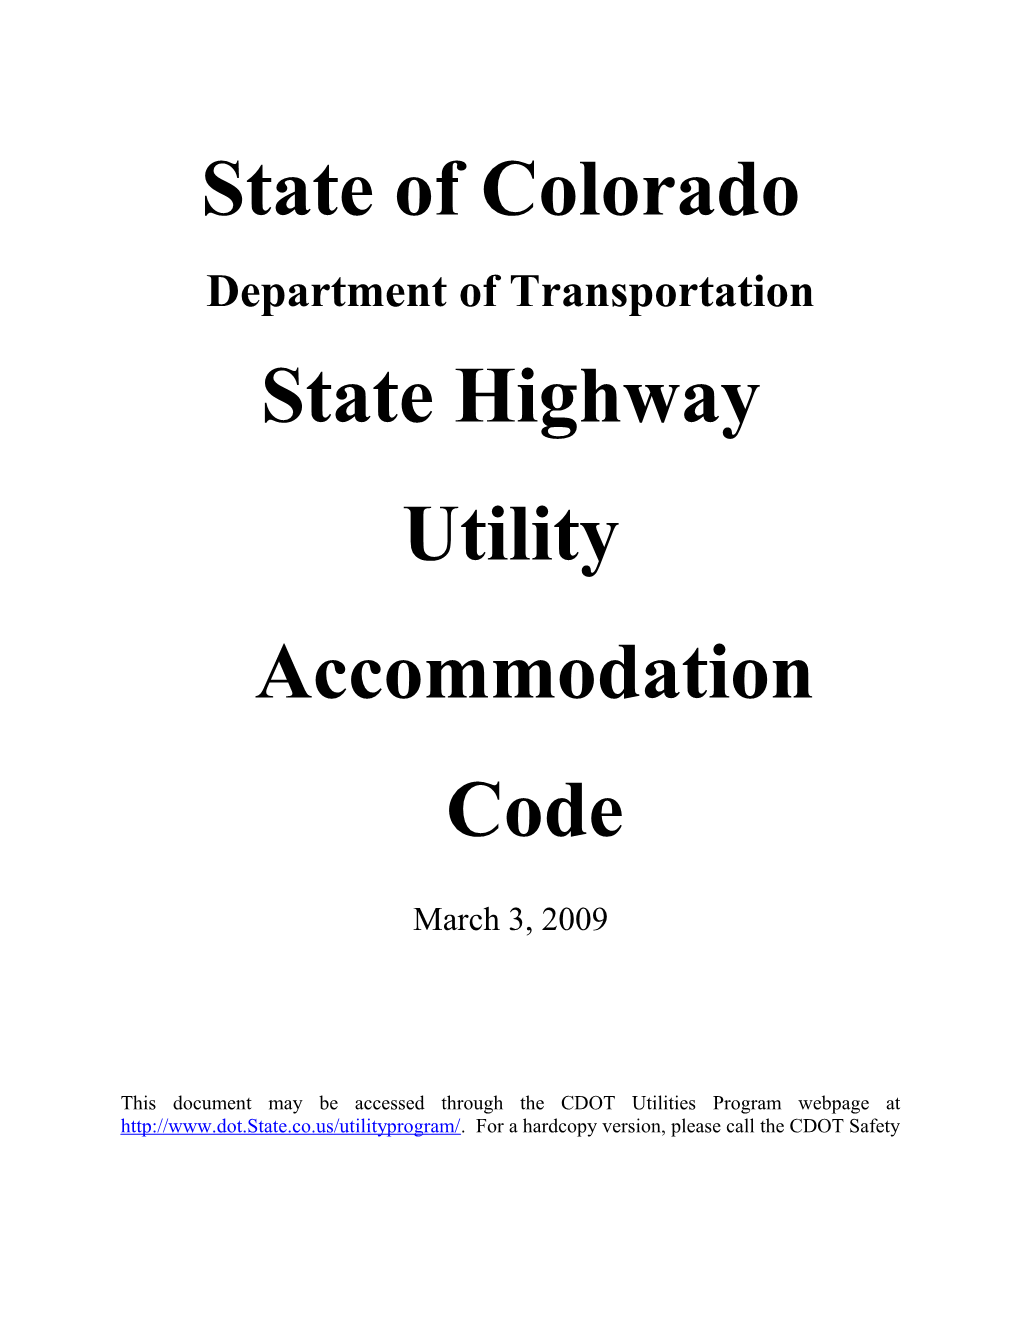 State of Colorado Utilities Manual